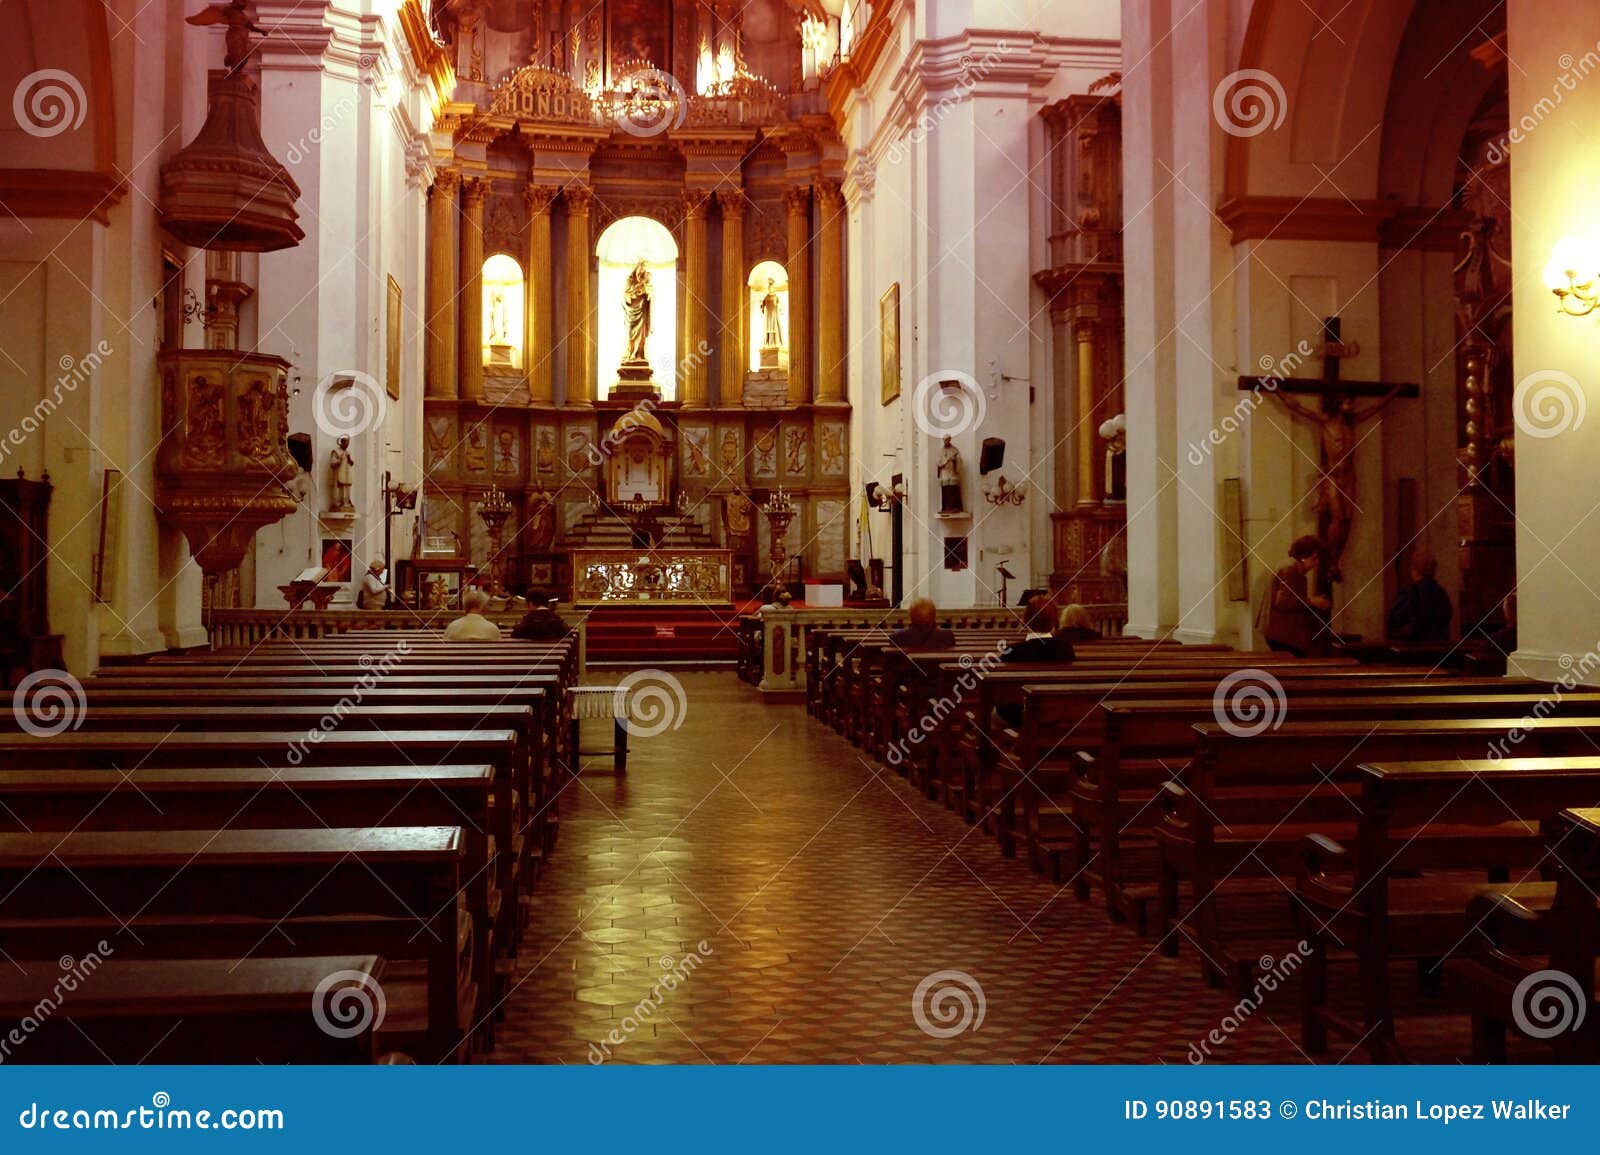 Iglesia de San Telmo imagen de archivo. Imagen de situado - 90891583